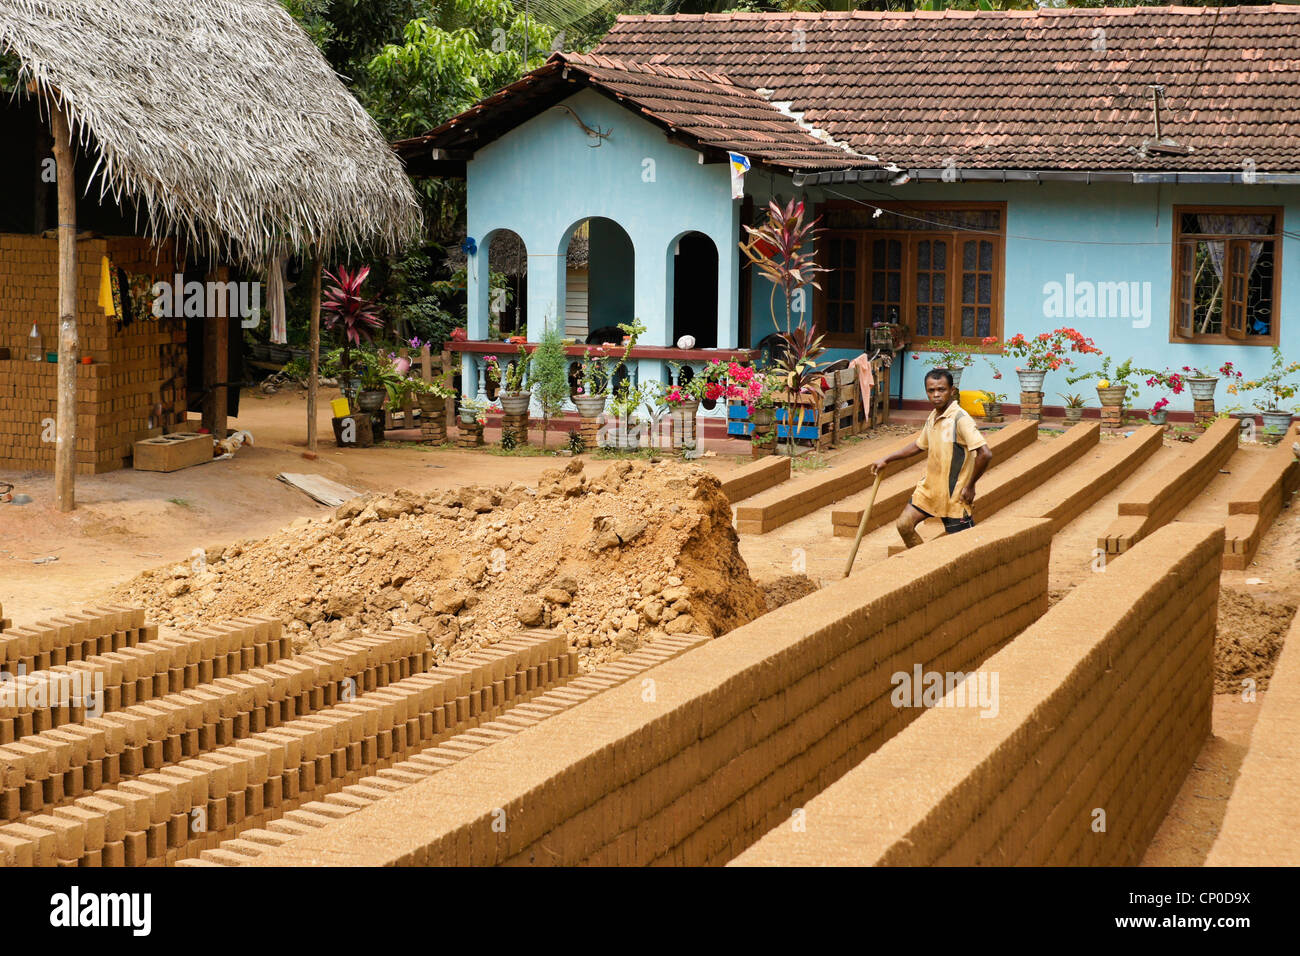 Man making mud bricks, Sri Lanka Stock Photo